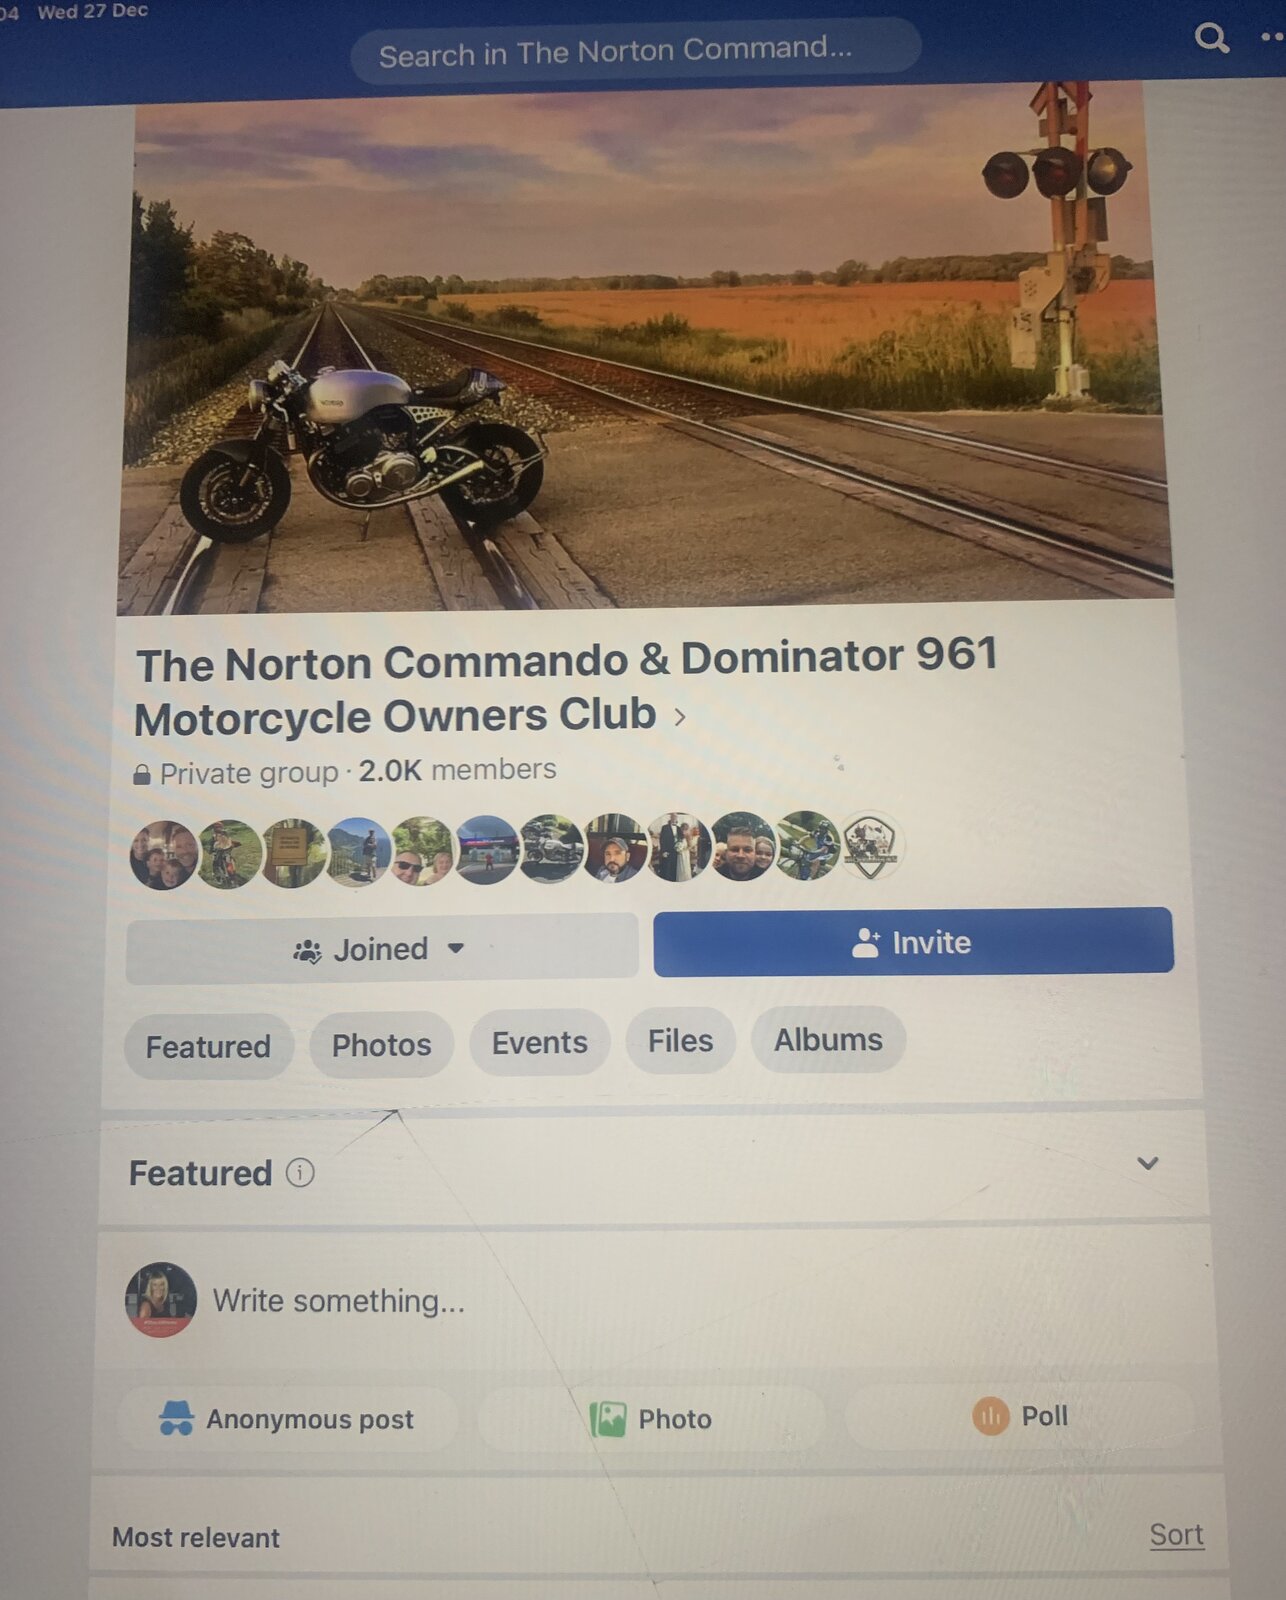 Norton 961 on Facebook & other social media